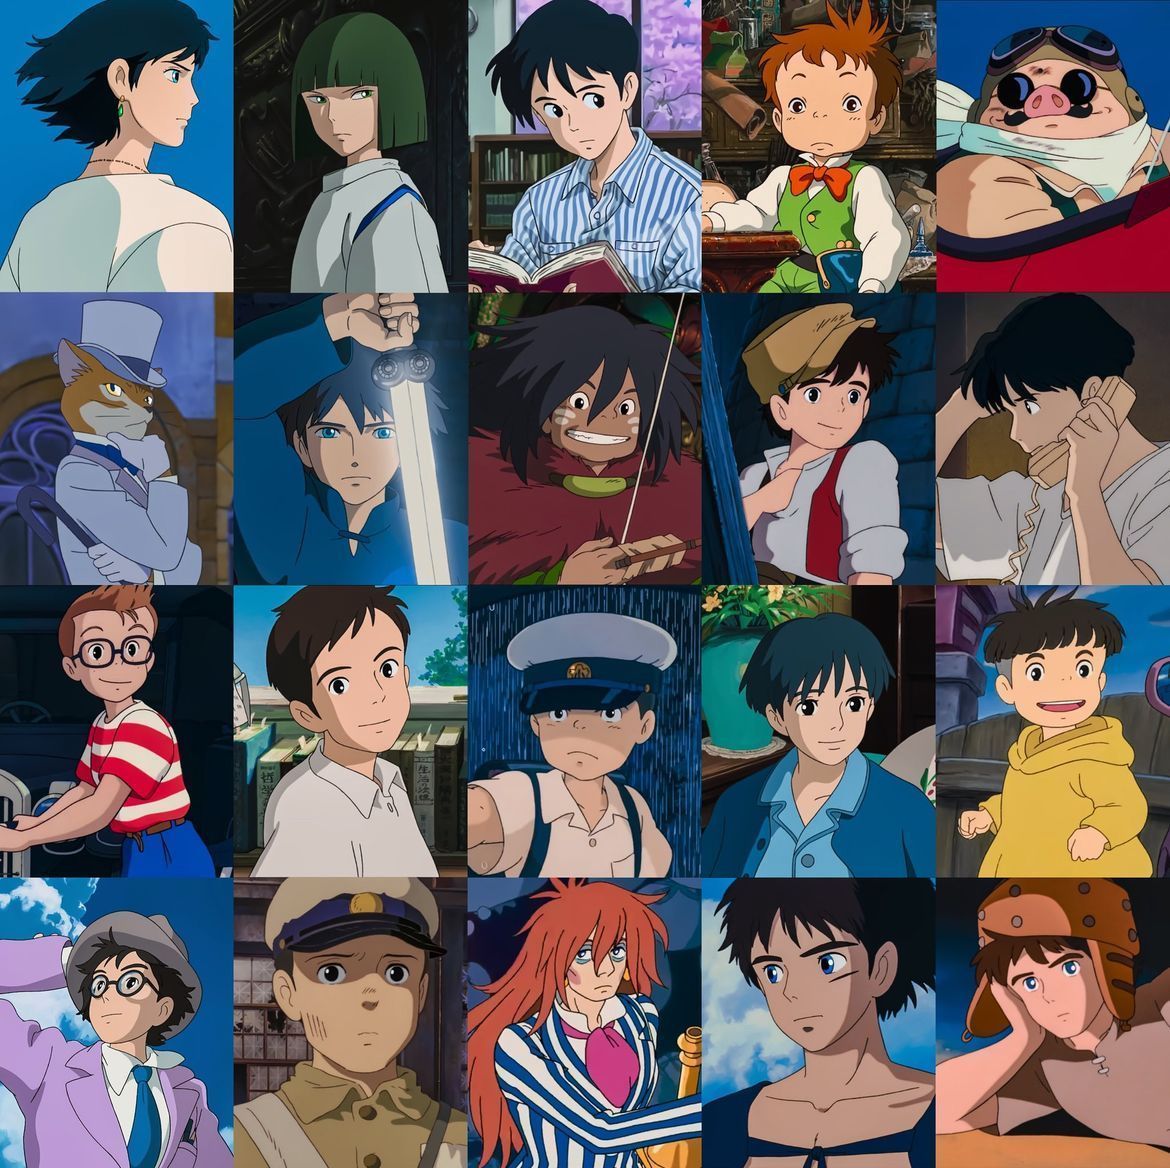 Name your top 3 Studio Ghibli boy !